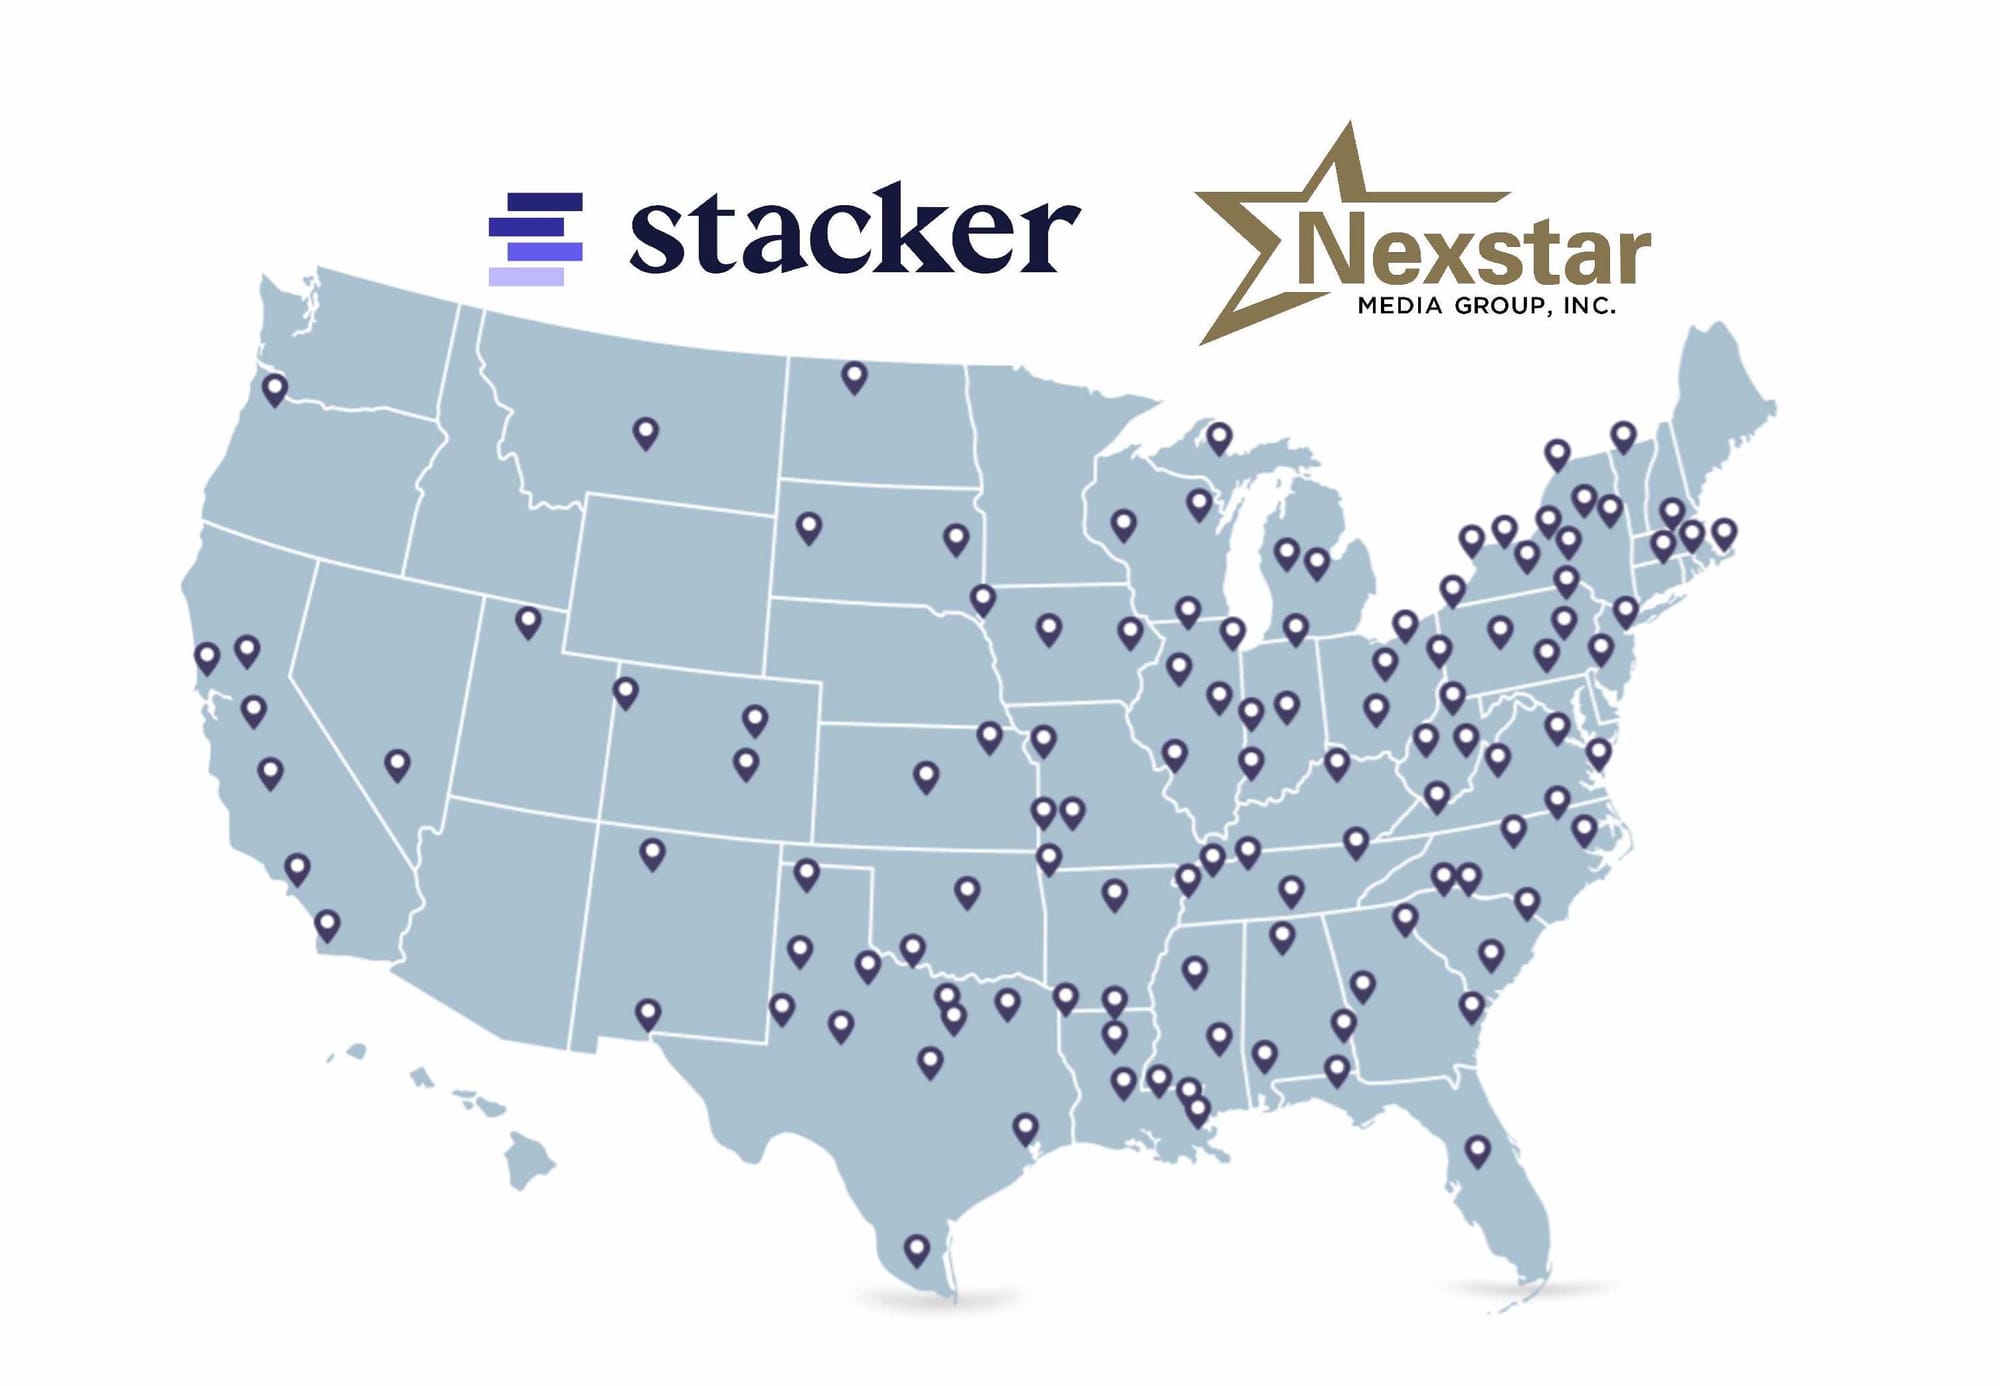 Nexstar network in the U.S. - Nexstar Media Group Inc.